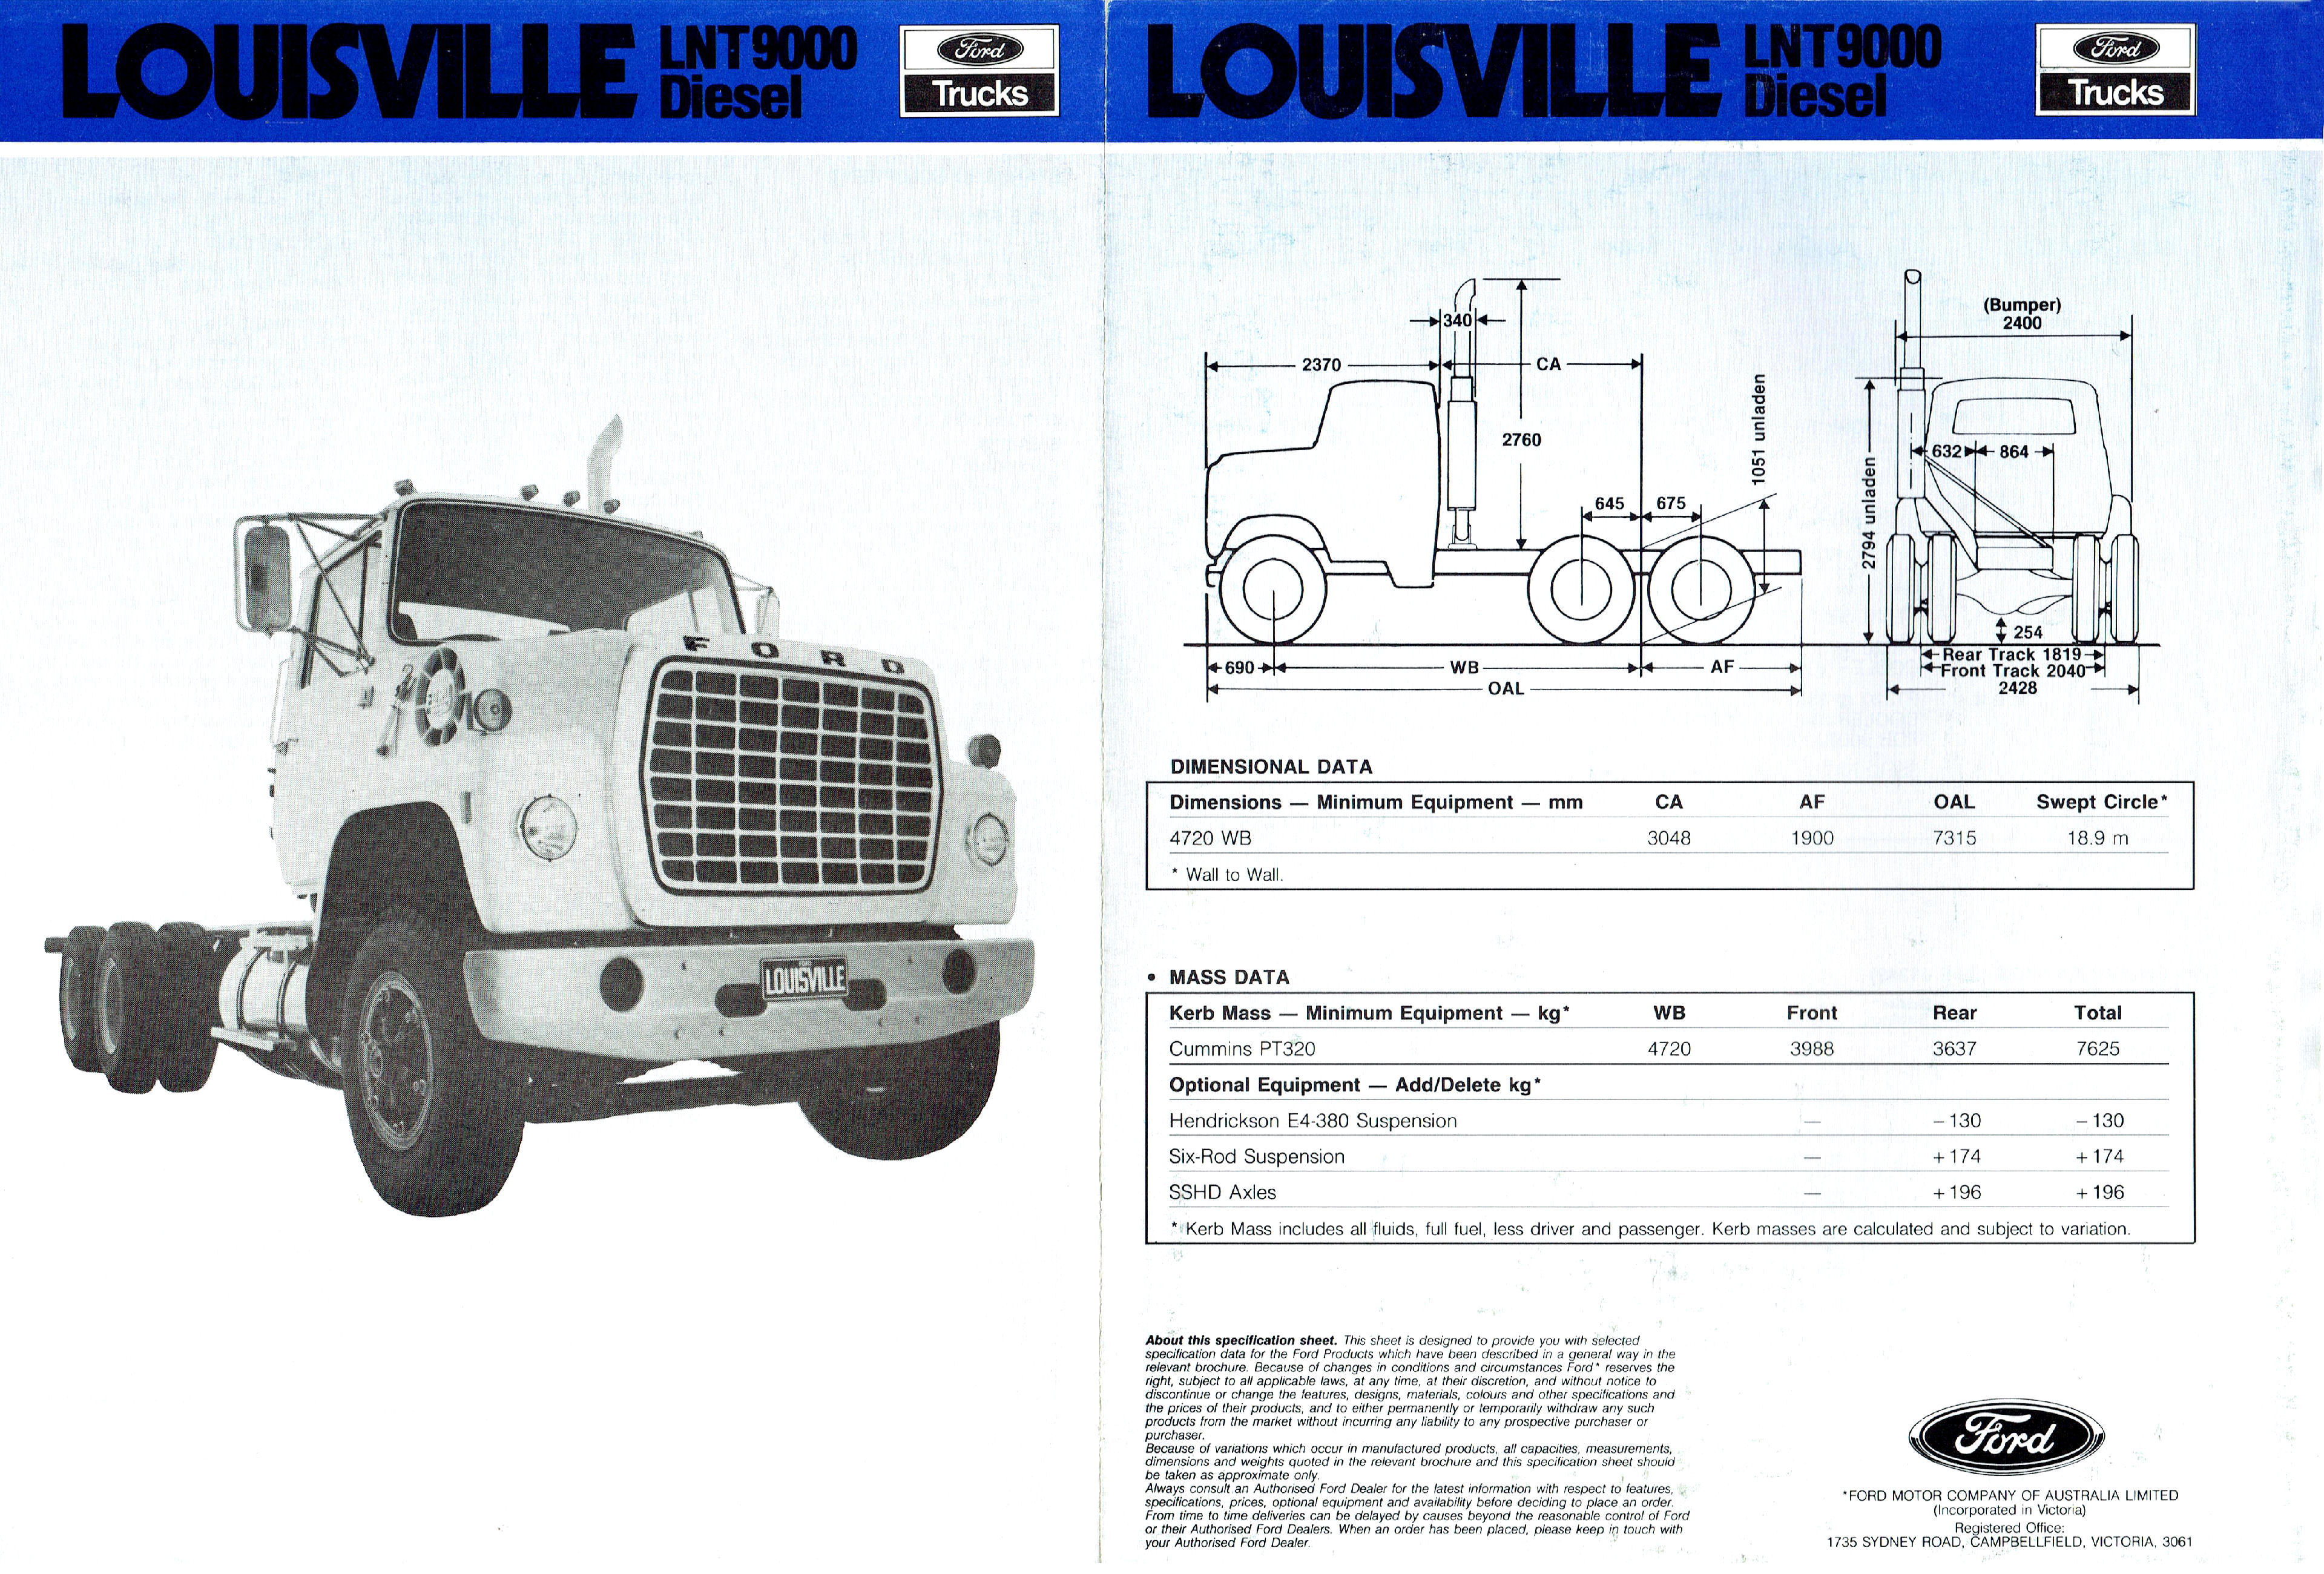 1987 Ford Louisville LNT 9000 Diesel (Aus)-Side A.jpg-2022-12-7 13.52.52